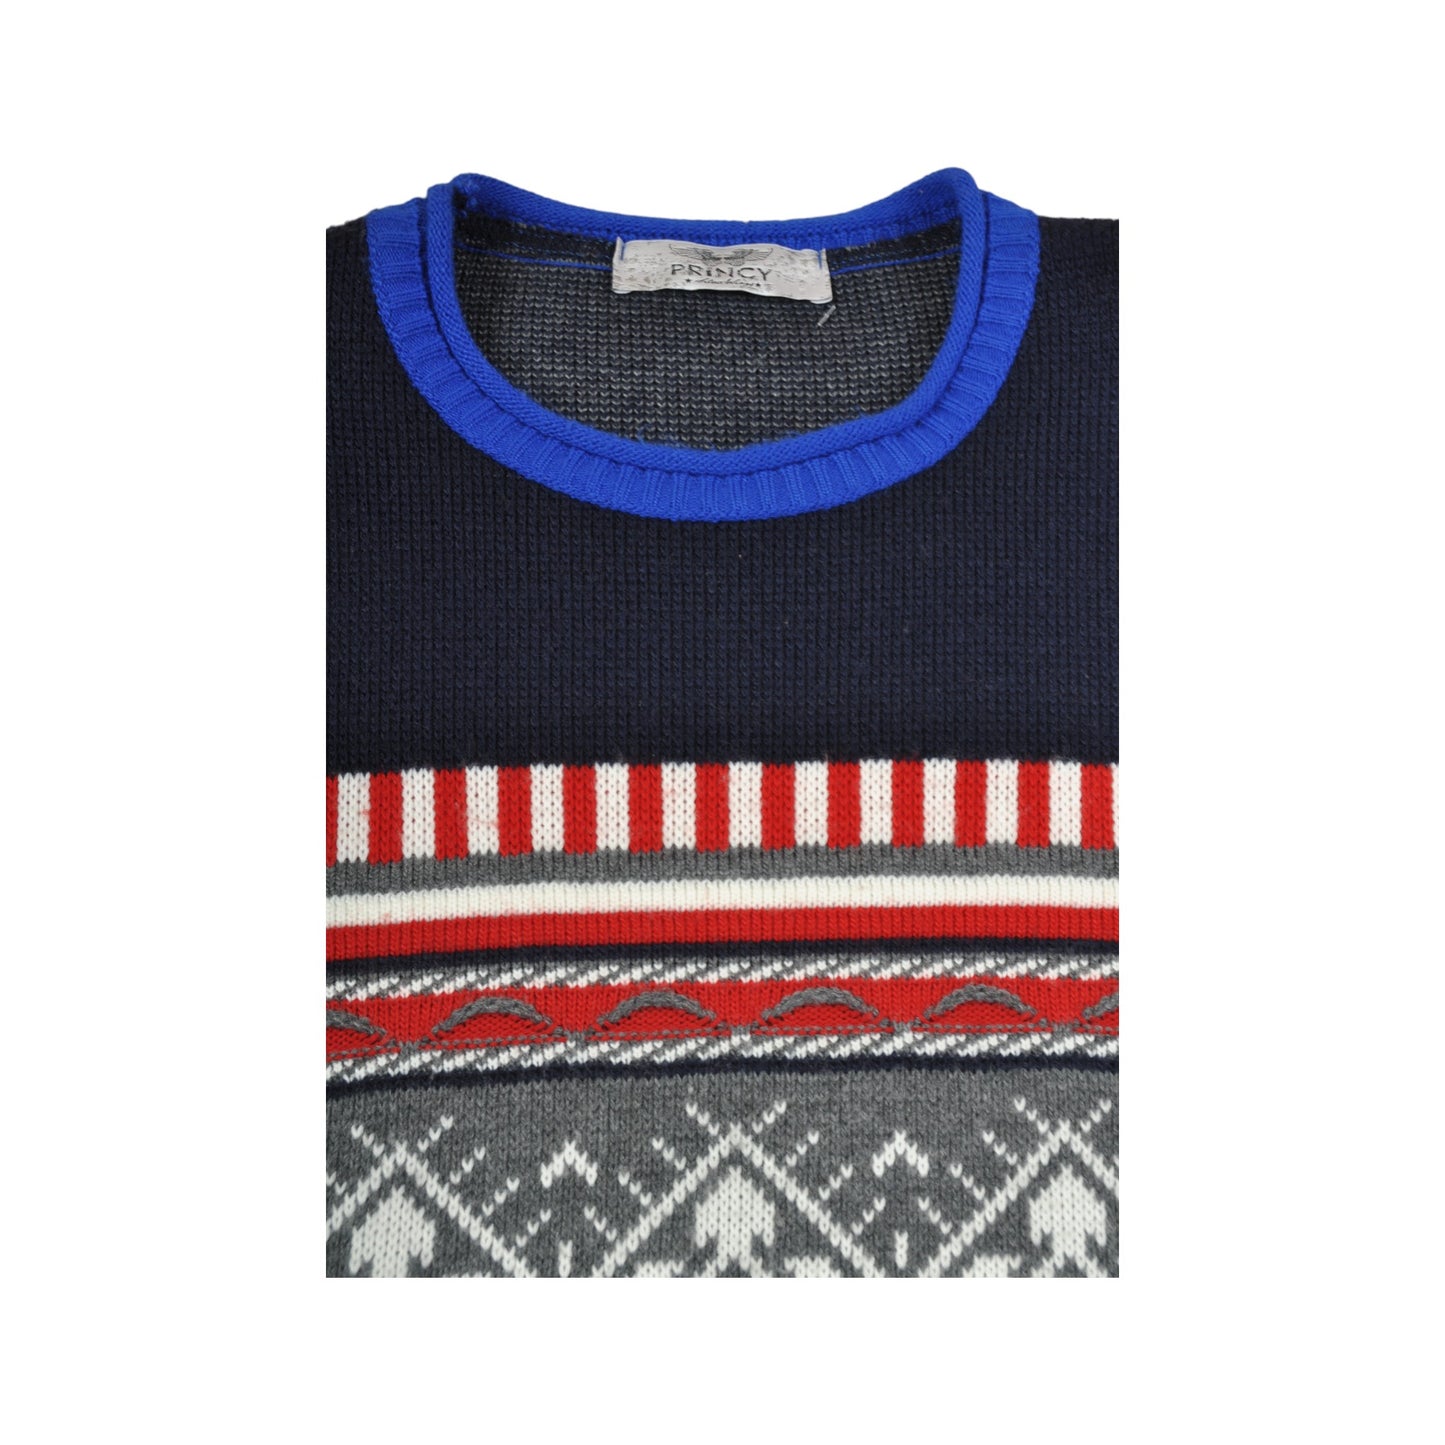 Vintage Knitwear Sweater Retro Pattern Blue Medium